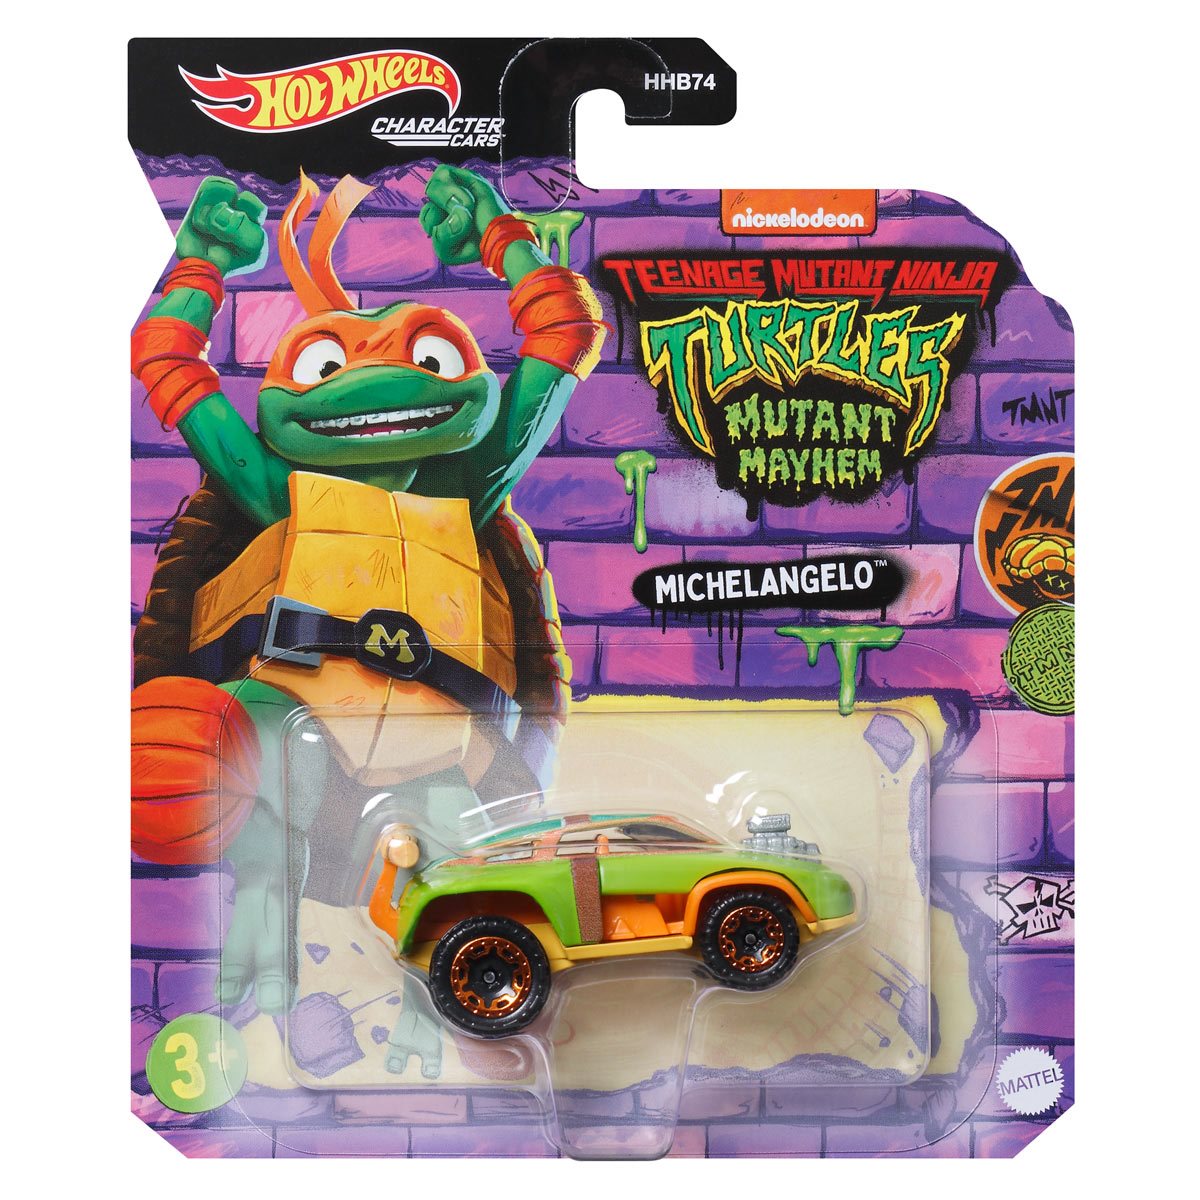 Hot Wheels Character Cars - Viacom - Teenage Mutant Ninja Turtles - Michelangelo